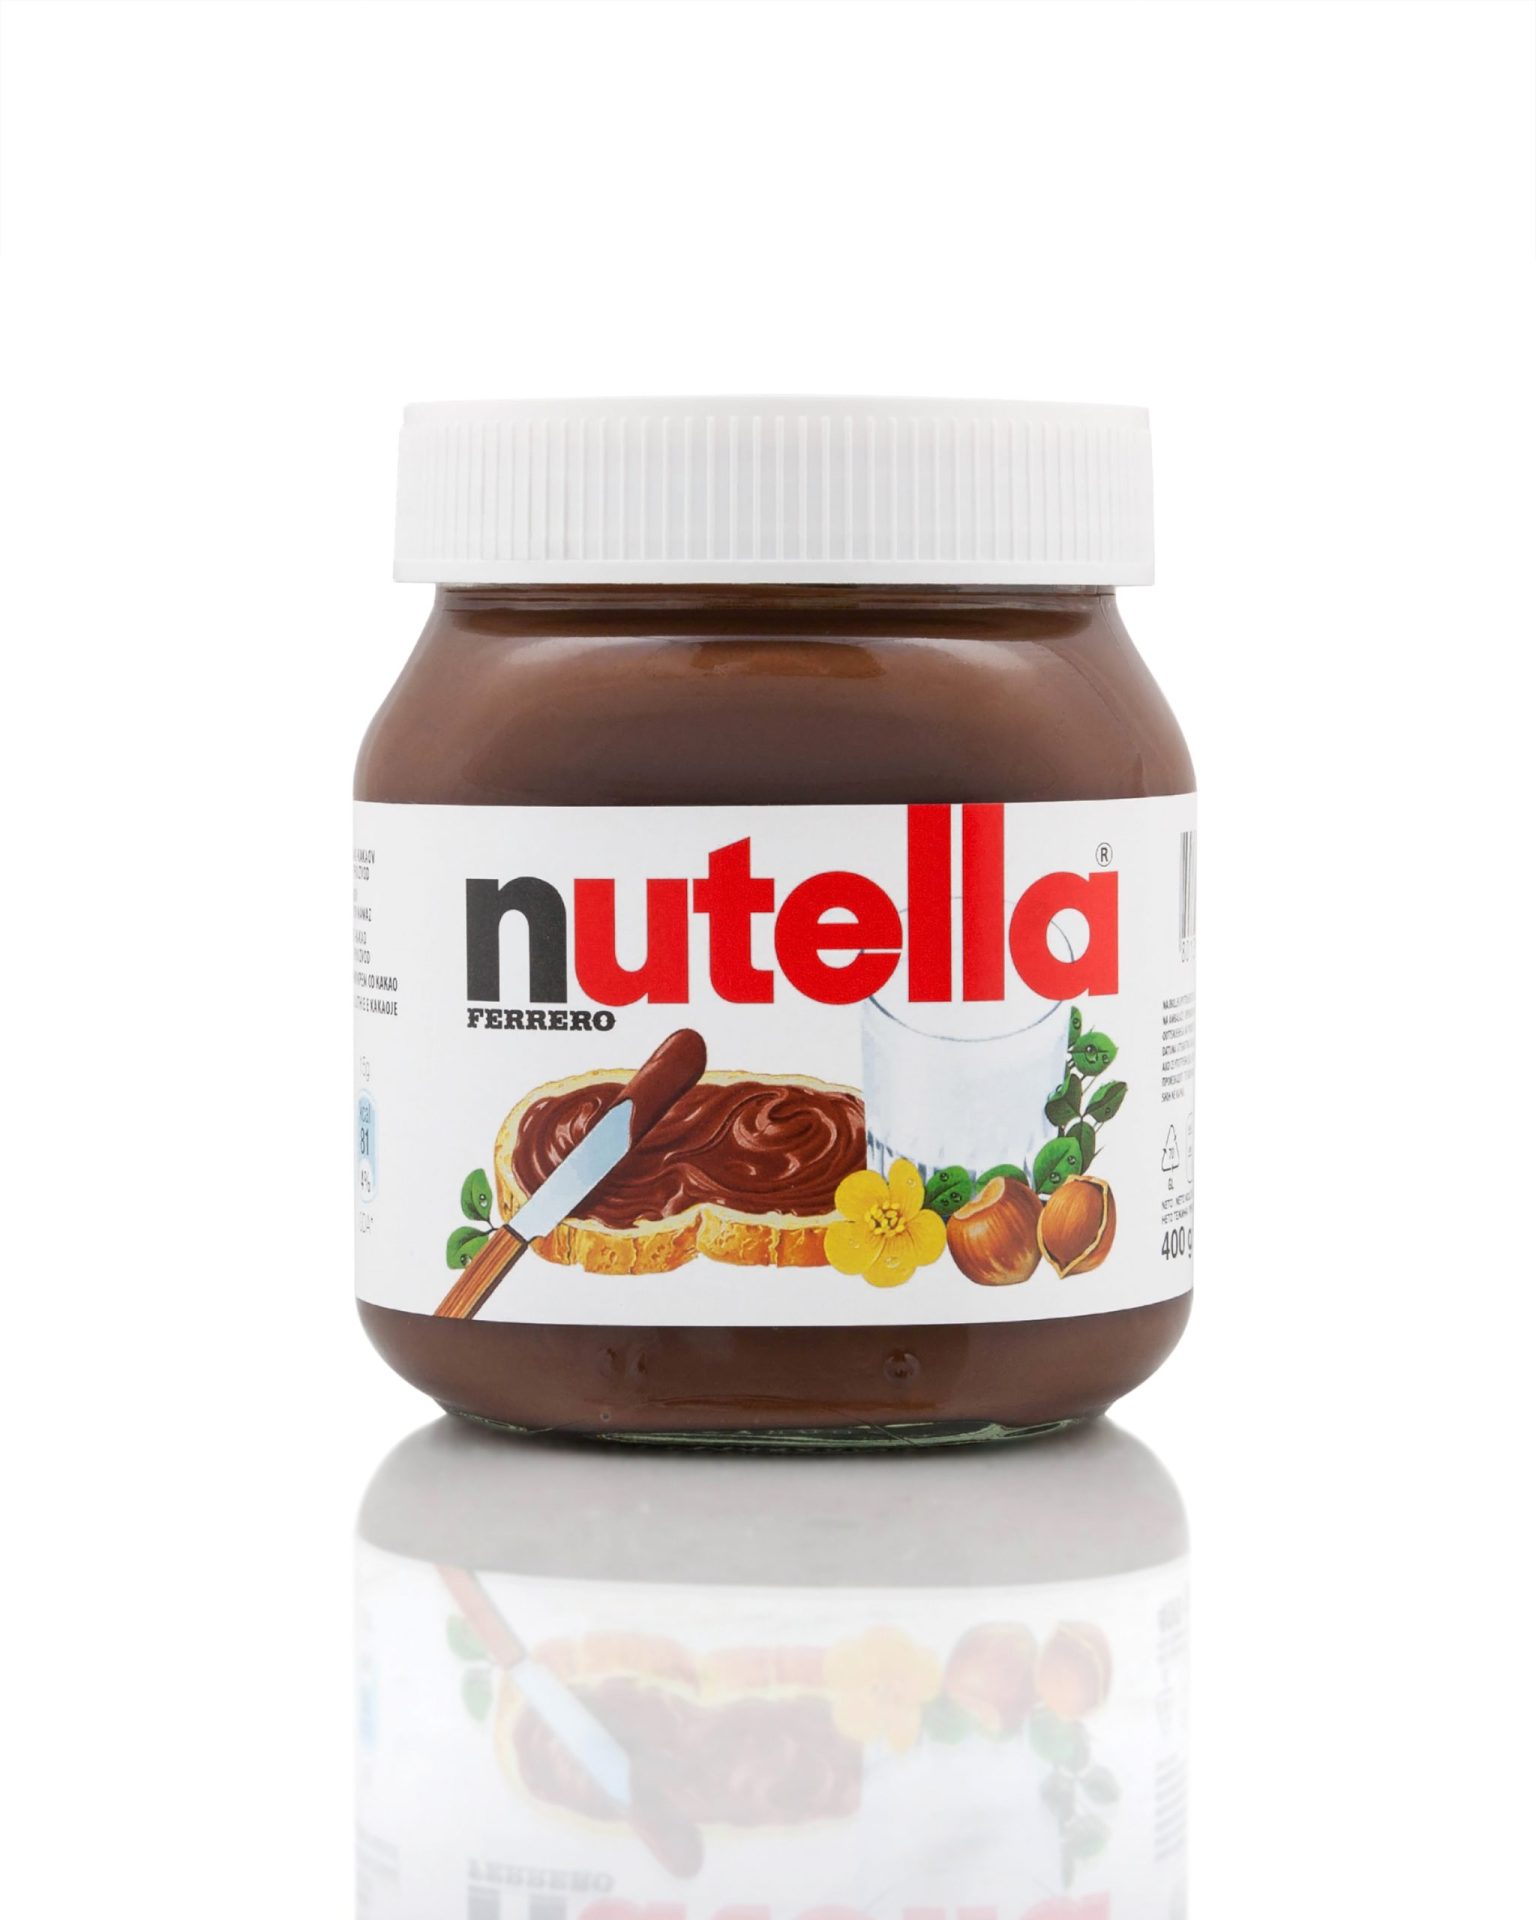 Nutella retirada de supermercados italianos por causar cancro